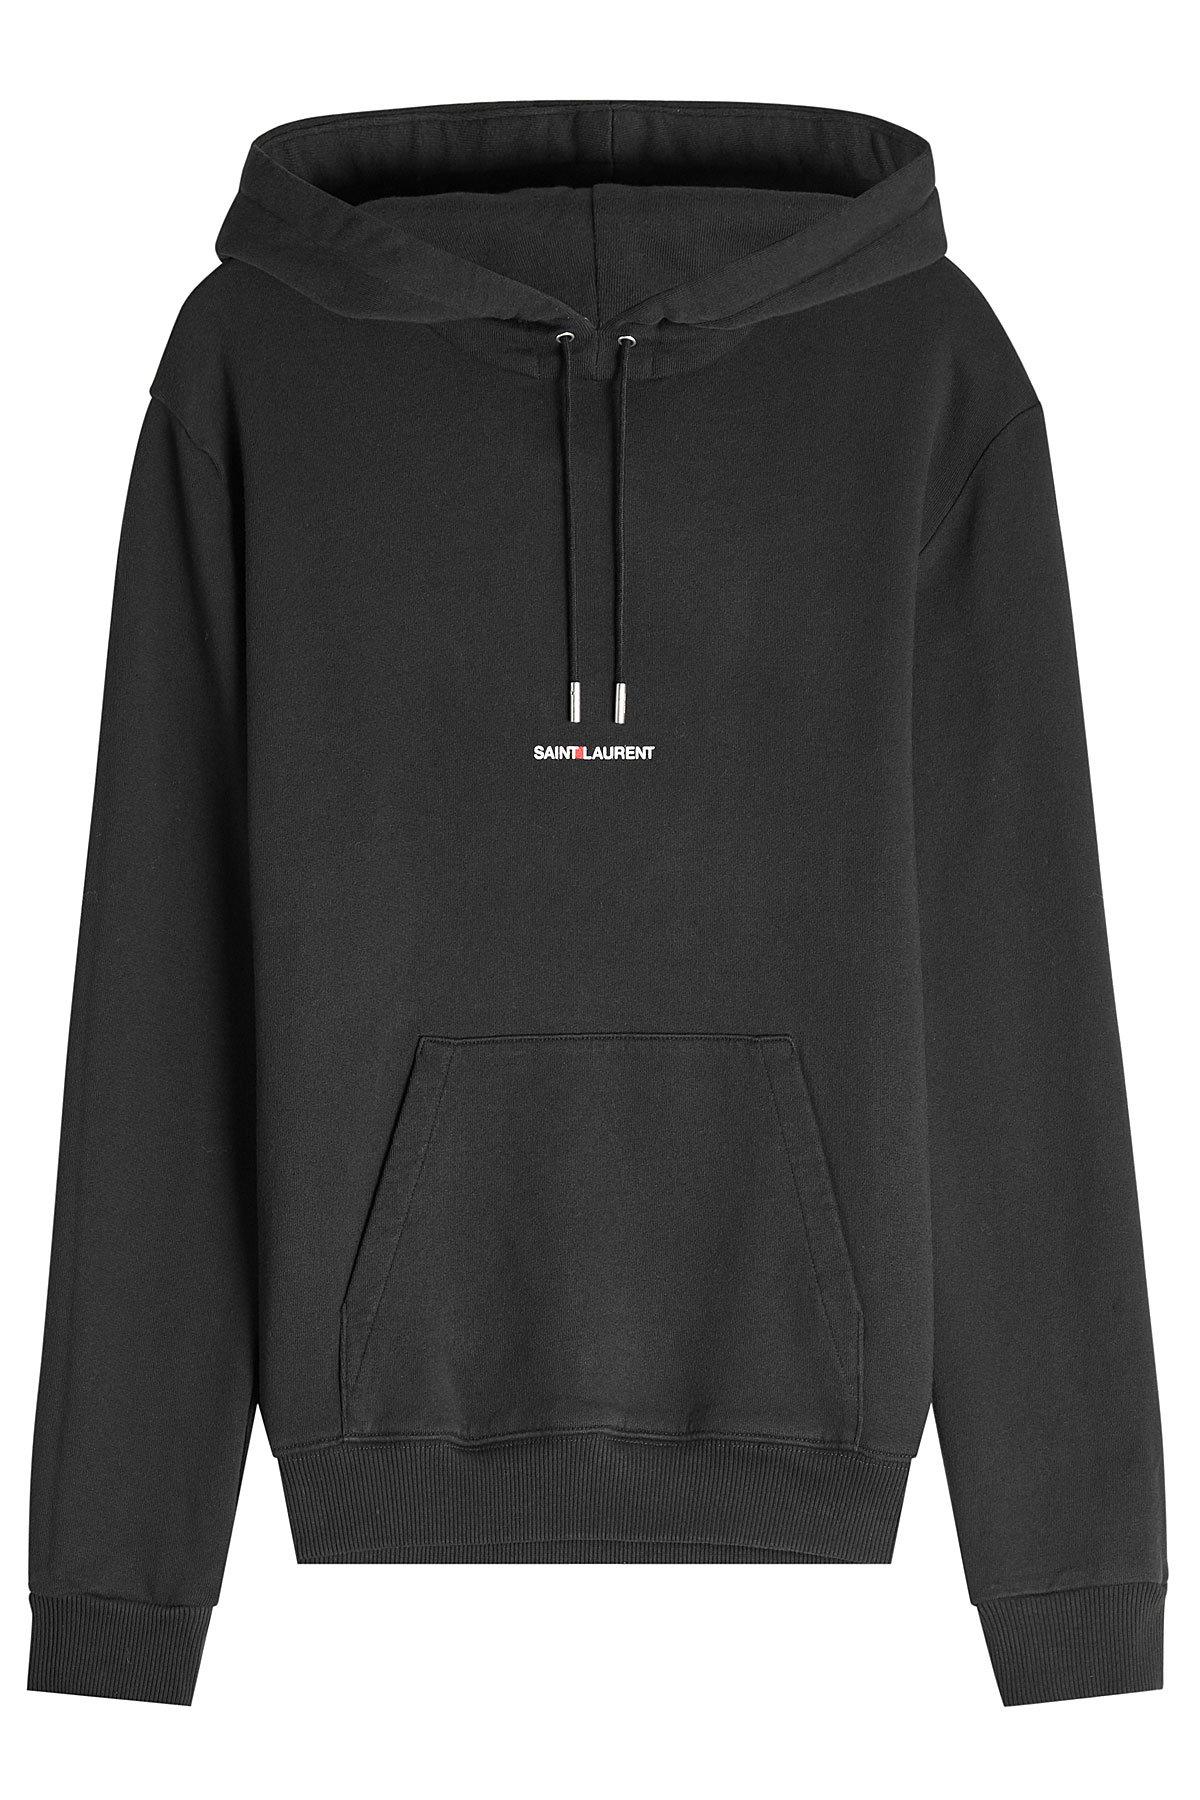 Saint Laurent Logo Cotton Hoodie in Black for Men - Lyst